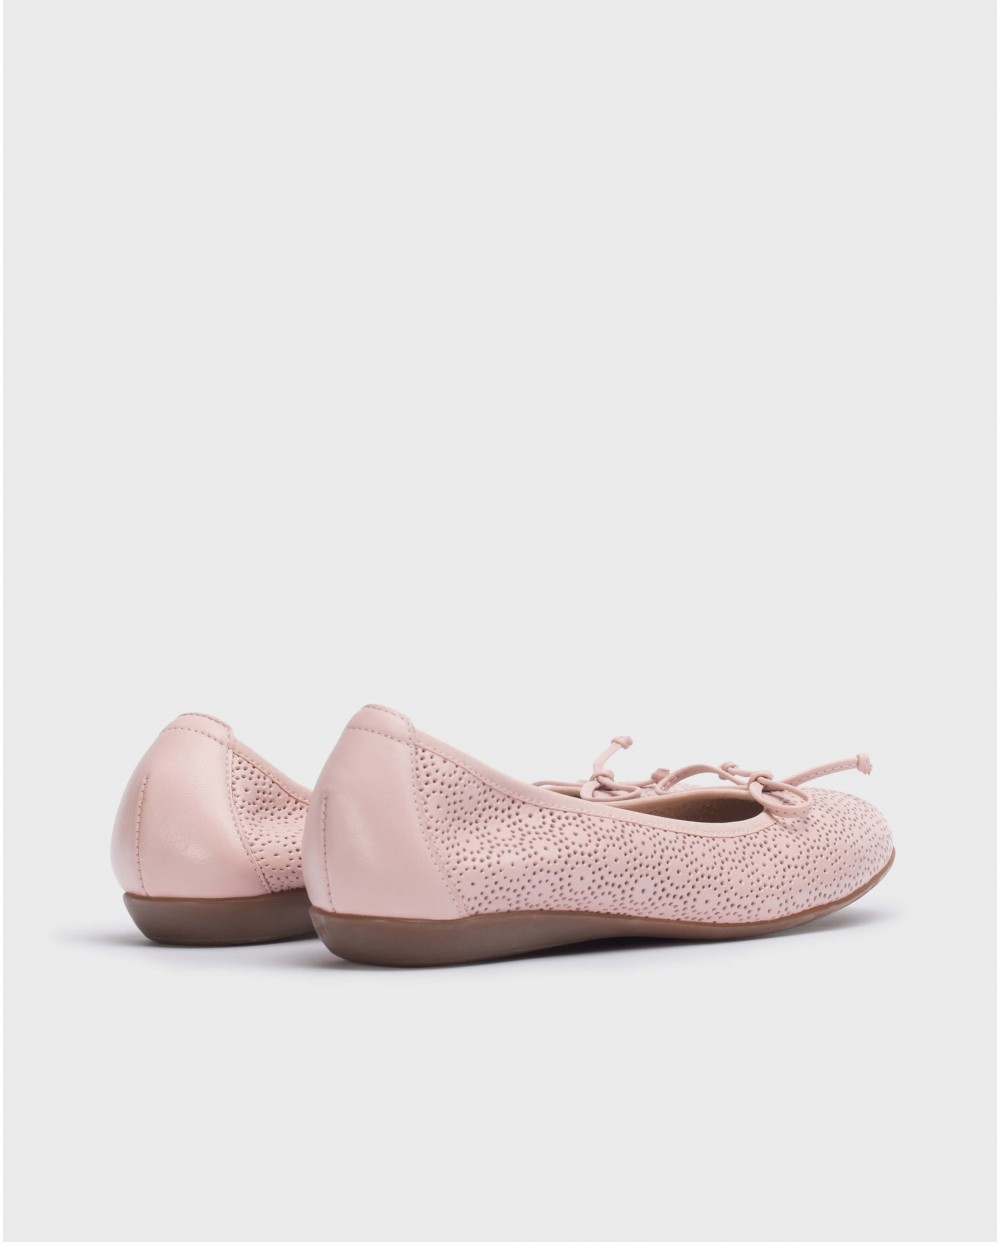 Wonders-Flat Shoes-Pink Lace Ballerina